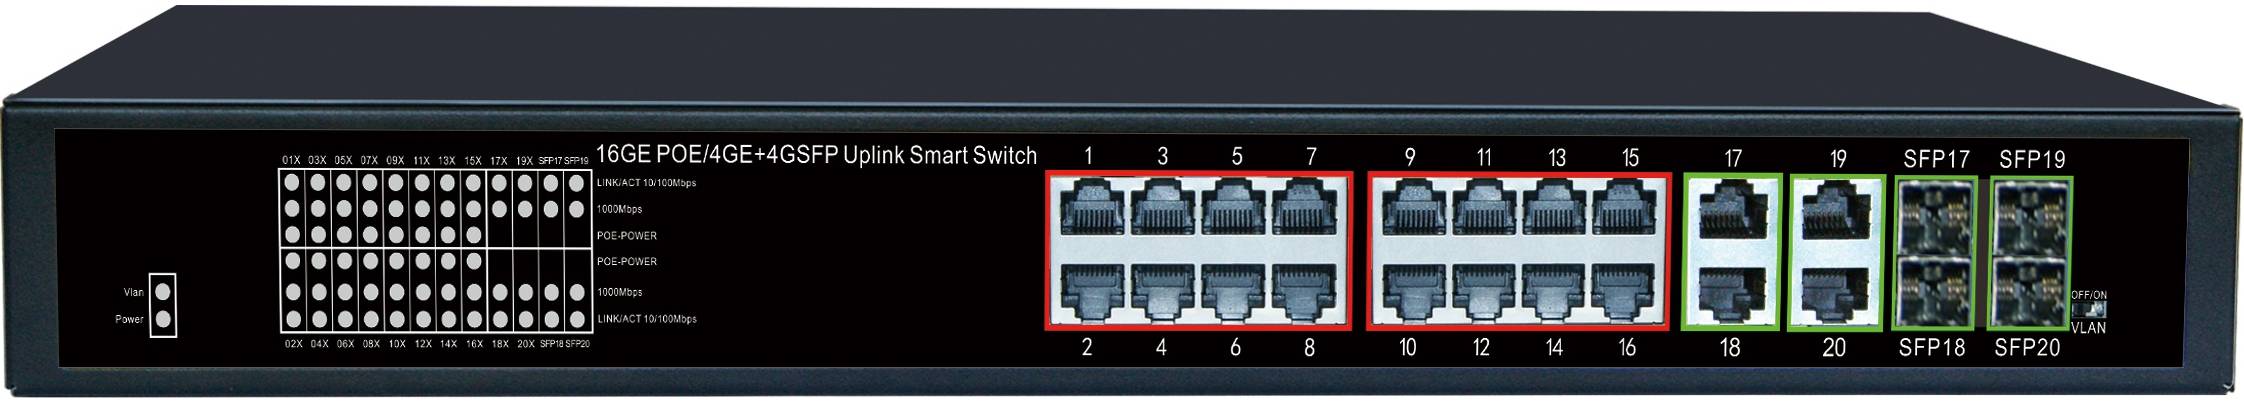 China Wholesale Poe Industrial Switch Factory Suppliers - 1U Type 16 Ports 10/100/1000M PoE Port+4 Uplink Gigabit Ethernet Port+4 Gigabit SFP Fiber Port, Smart PoE Switch JHA-P444016BH – JHA